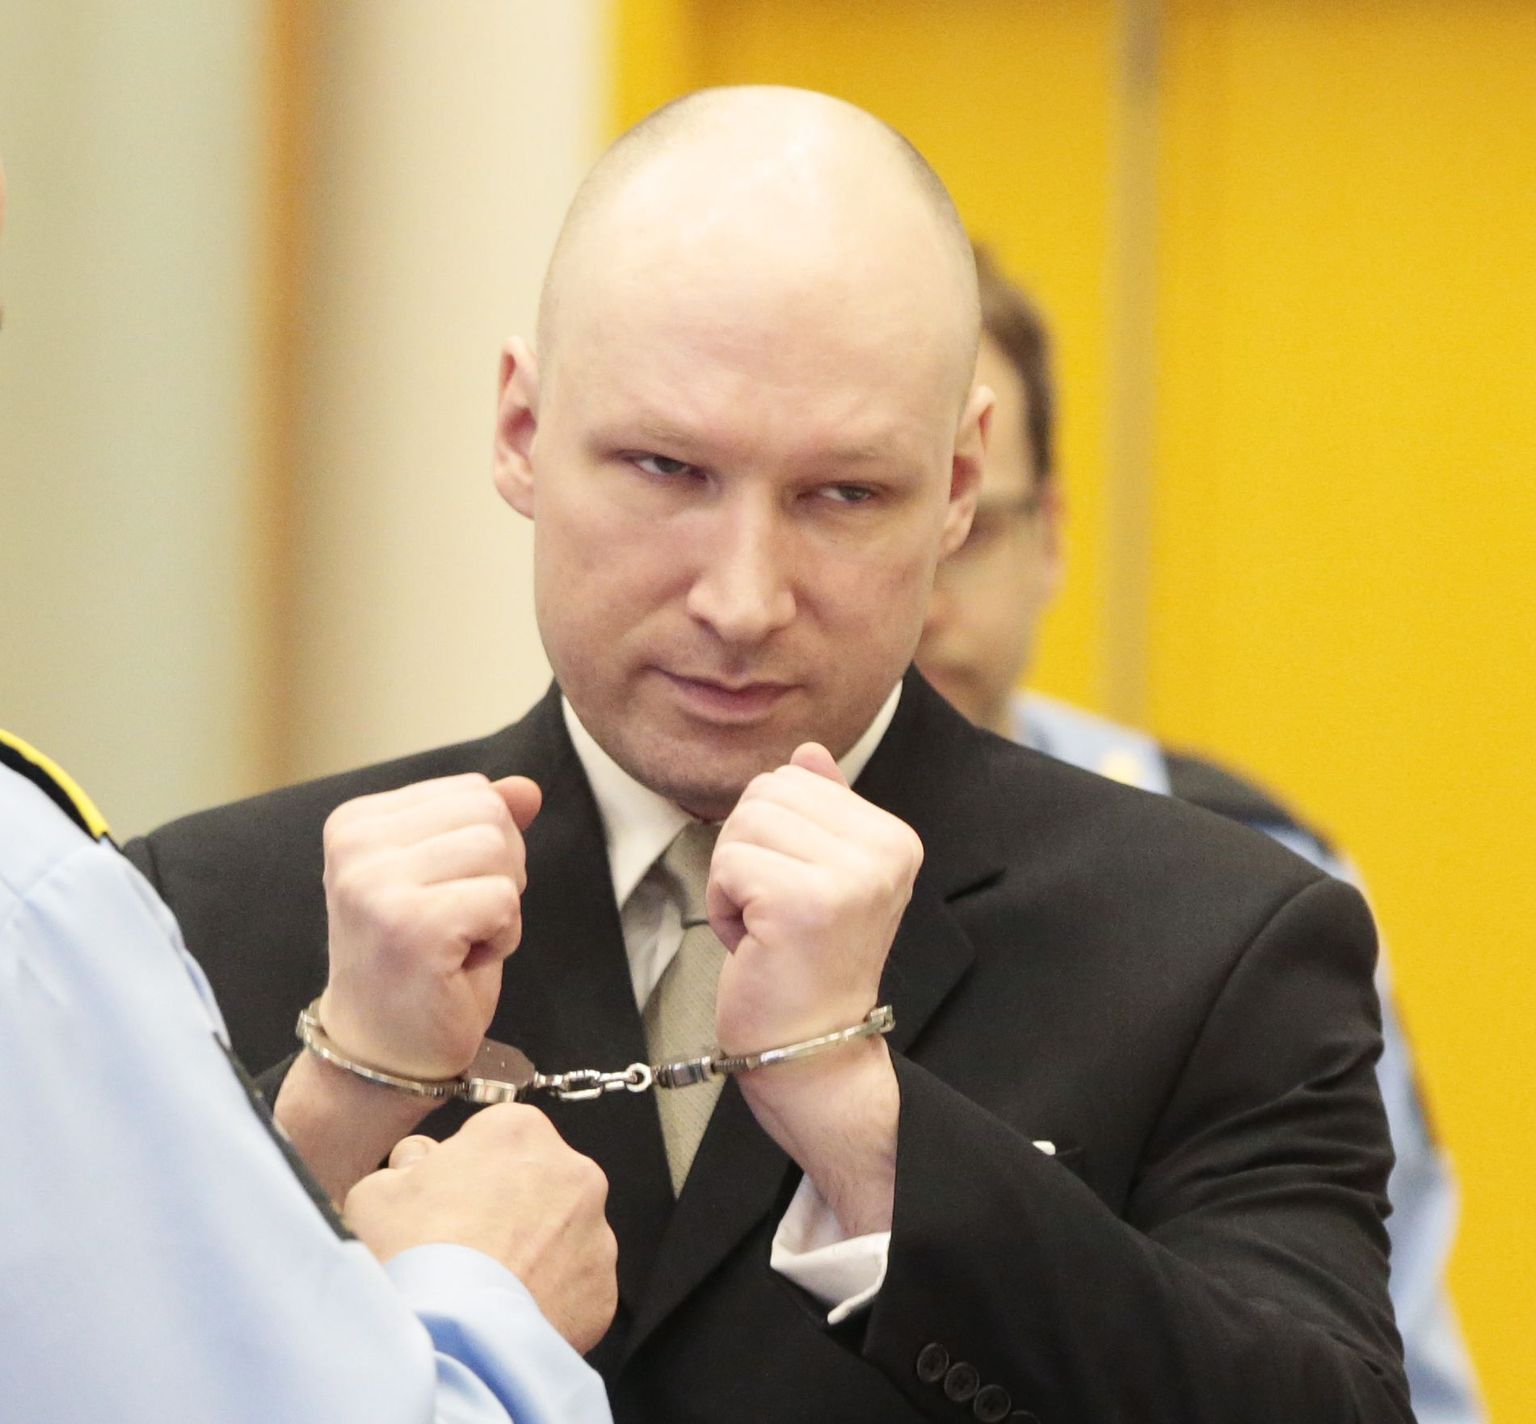 Massimõrvar Anders Behring Breivik